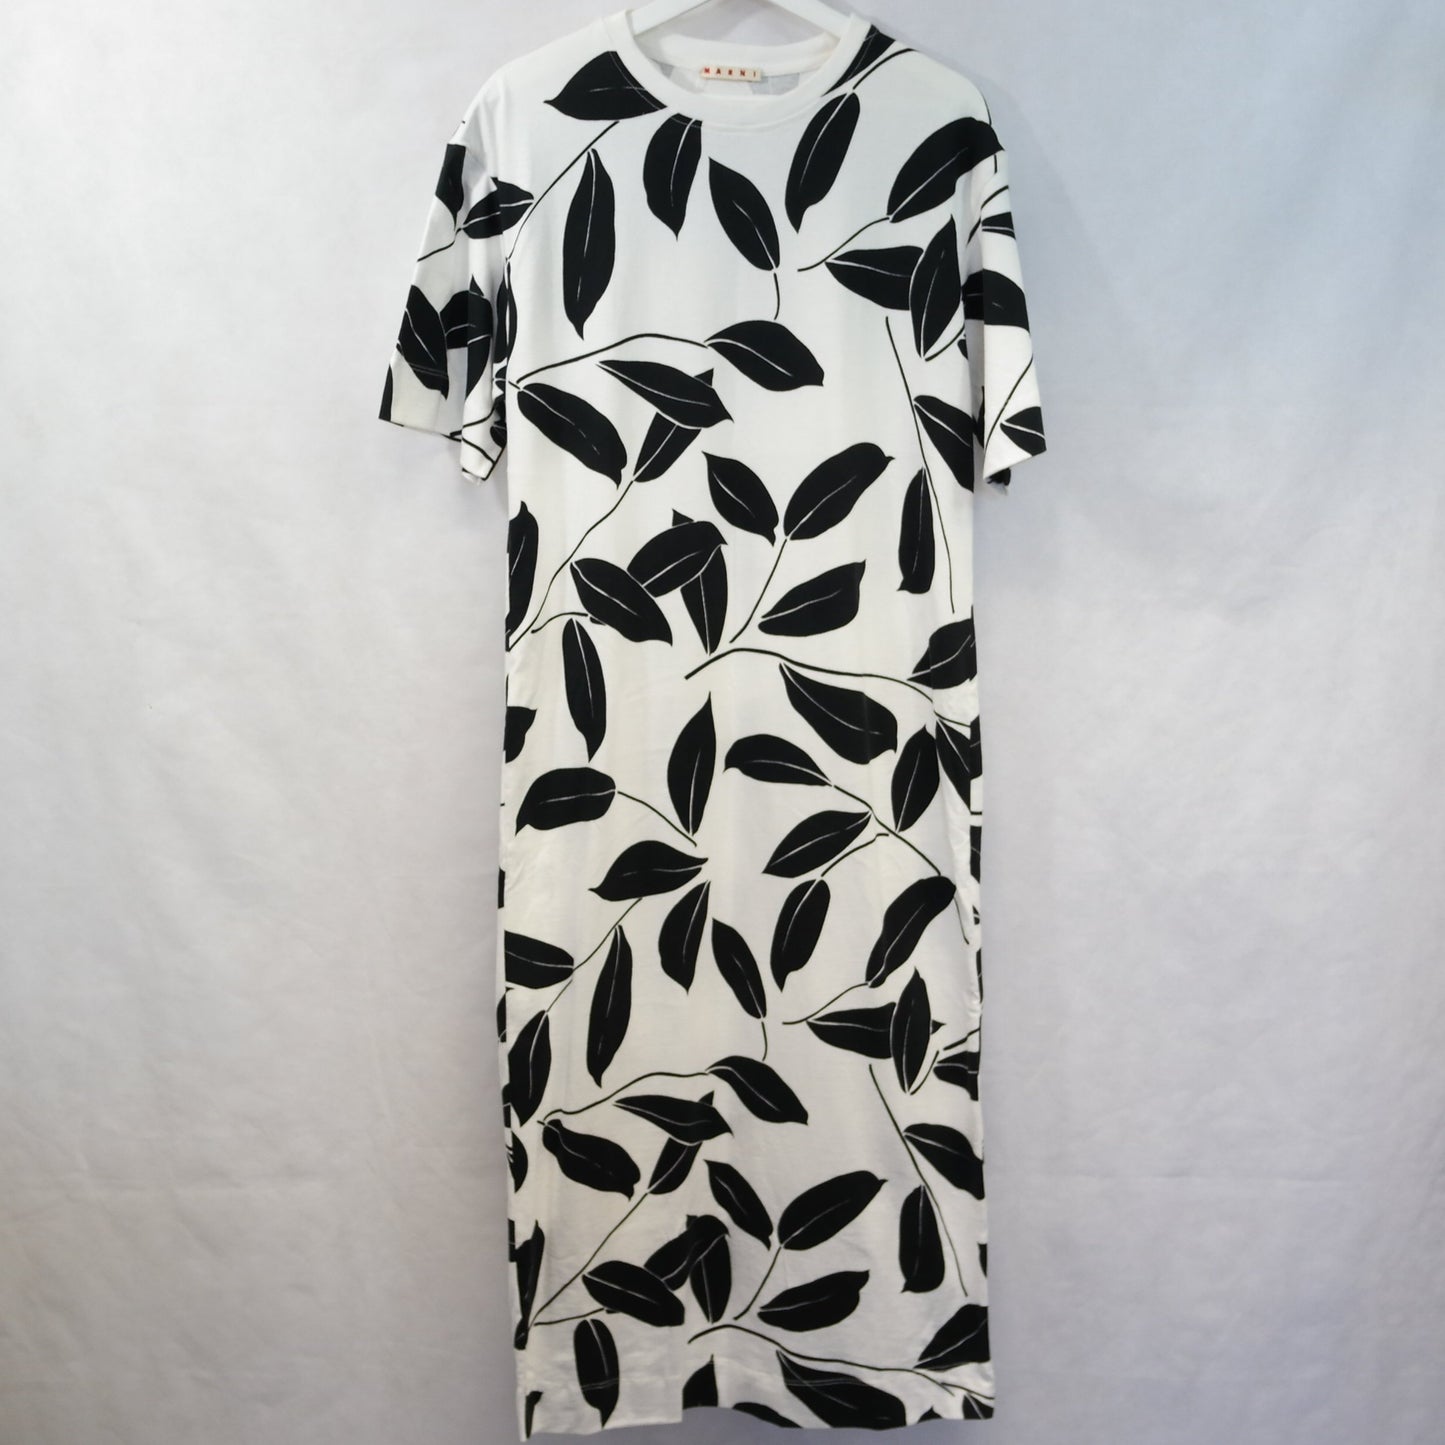 MARNI BLACK AND WHITE LEAF PRINT DRESS SIZE 40 UK 10